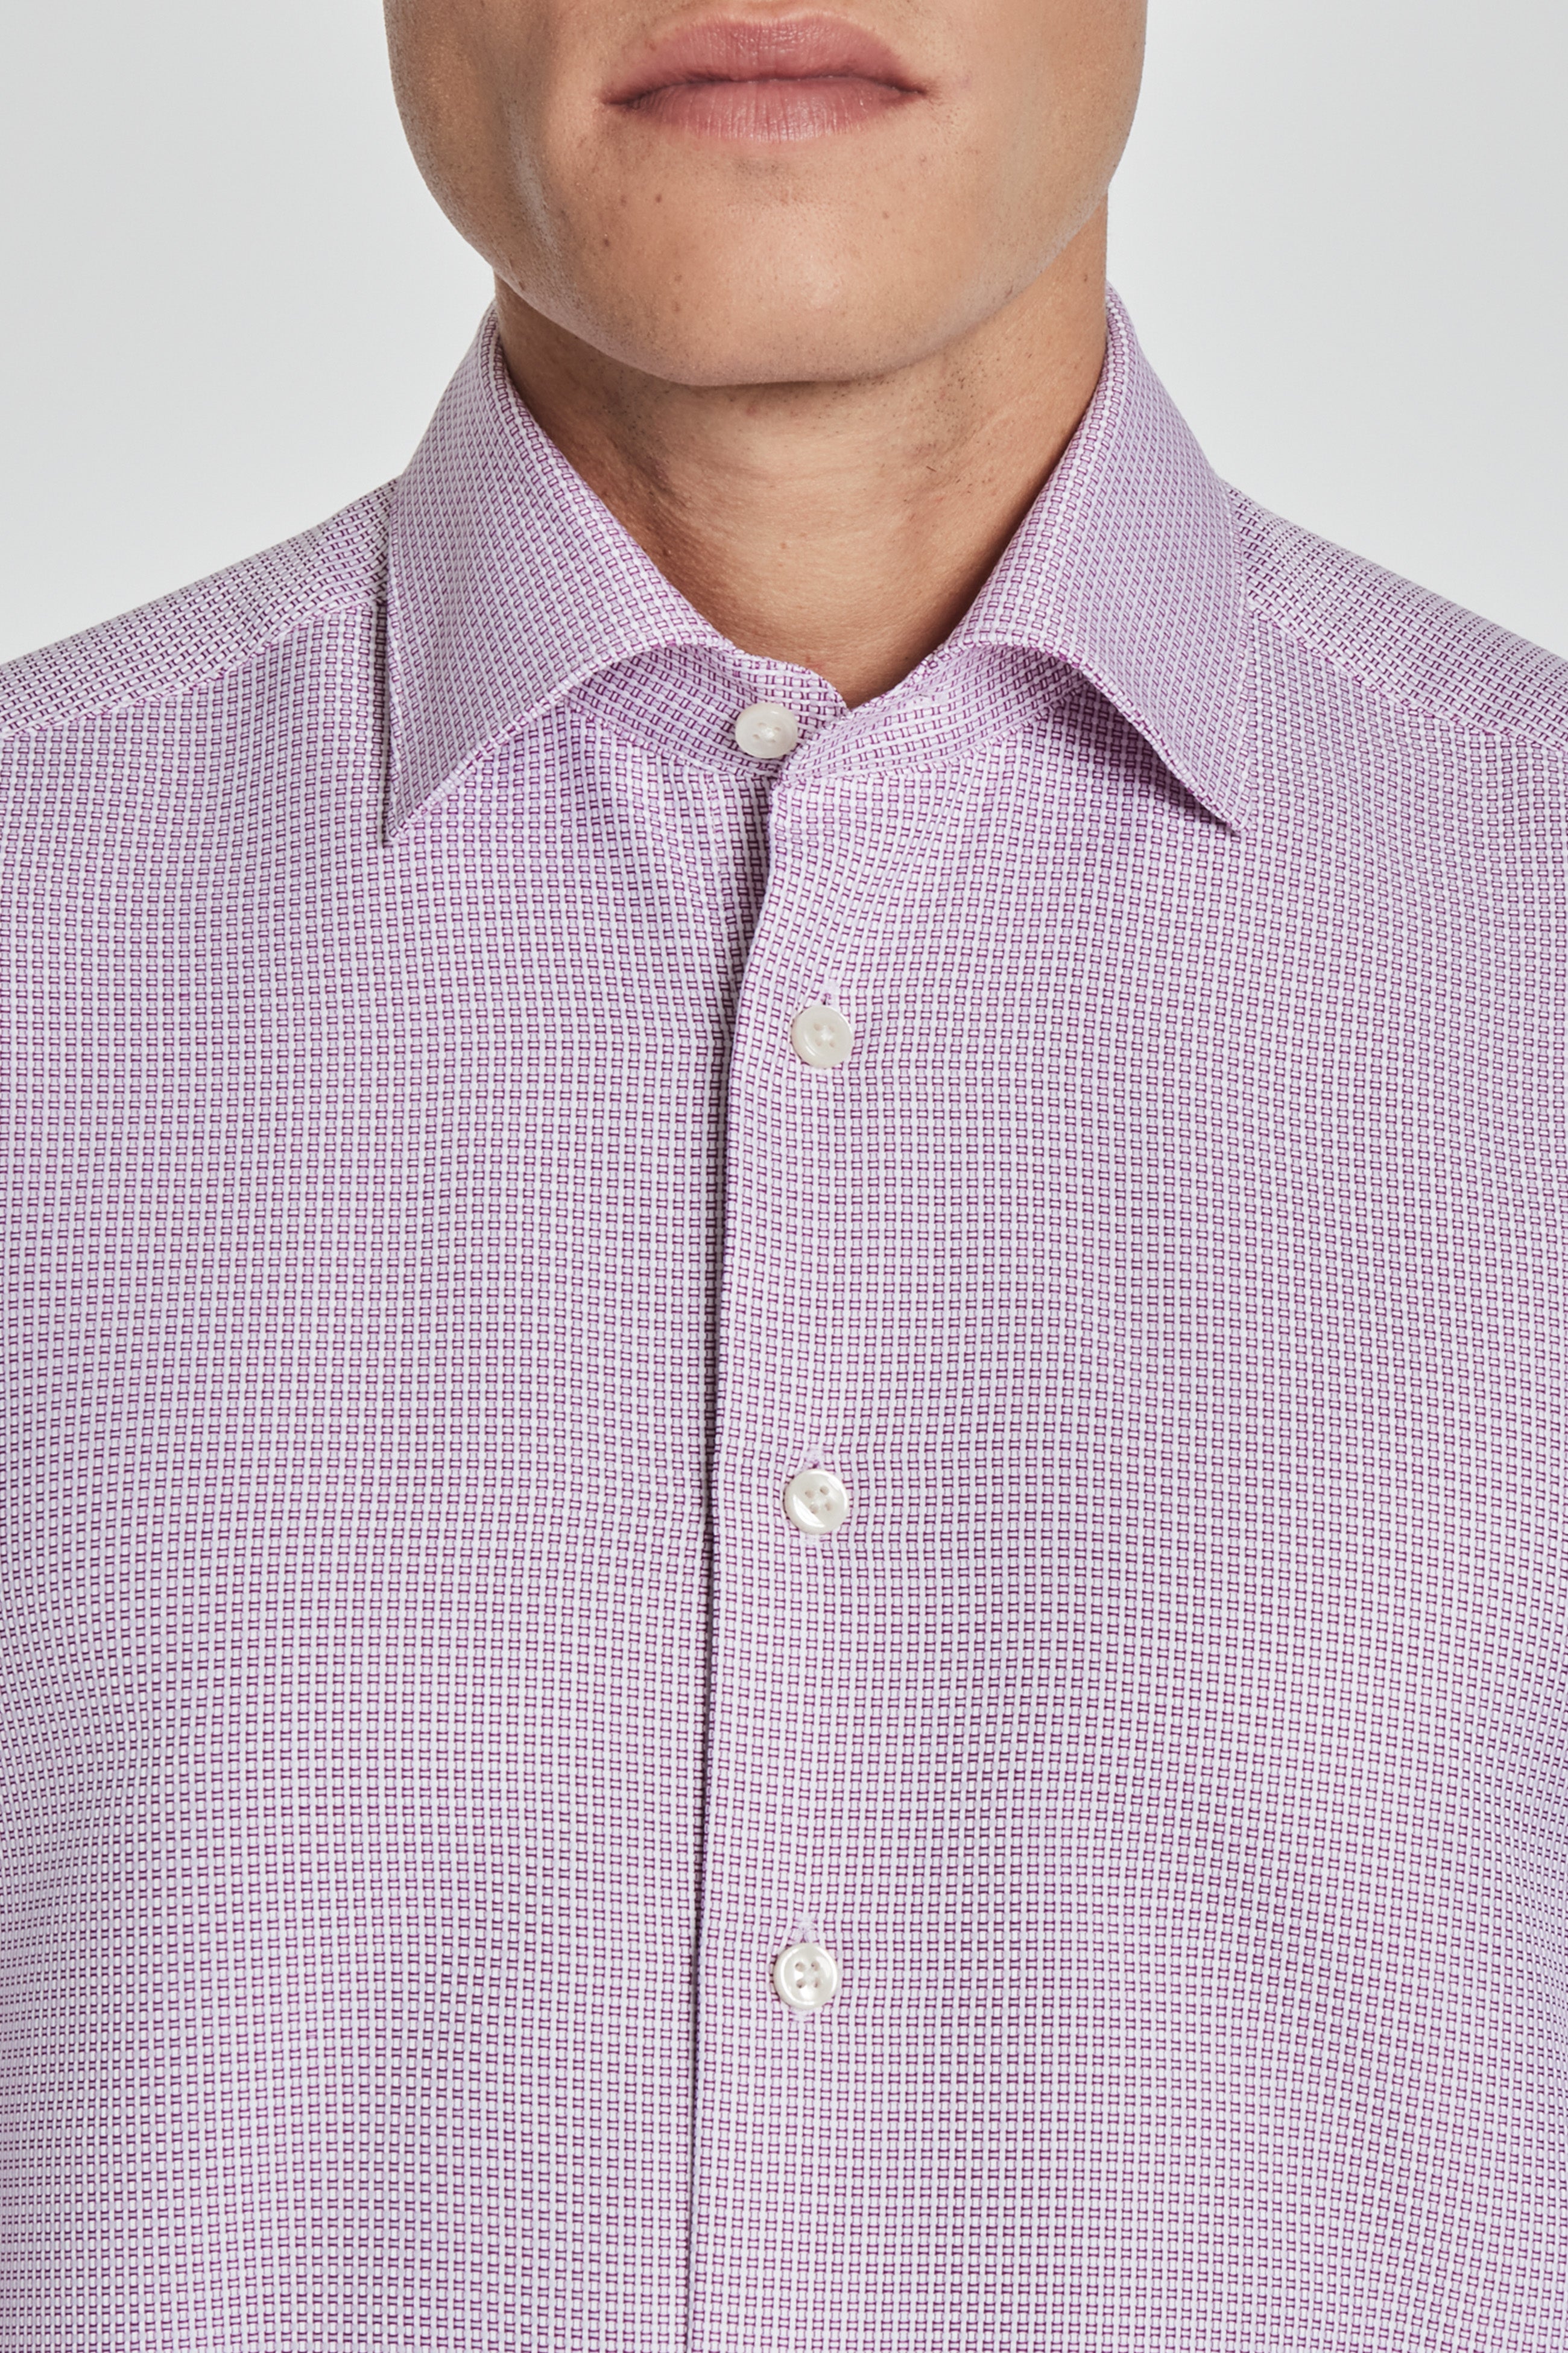 Alt view 2 Geometric Weave Cotton Dress Shirt in Purple